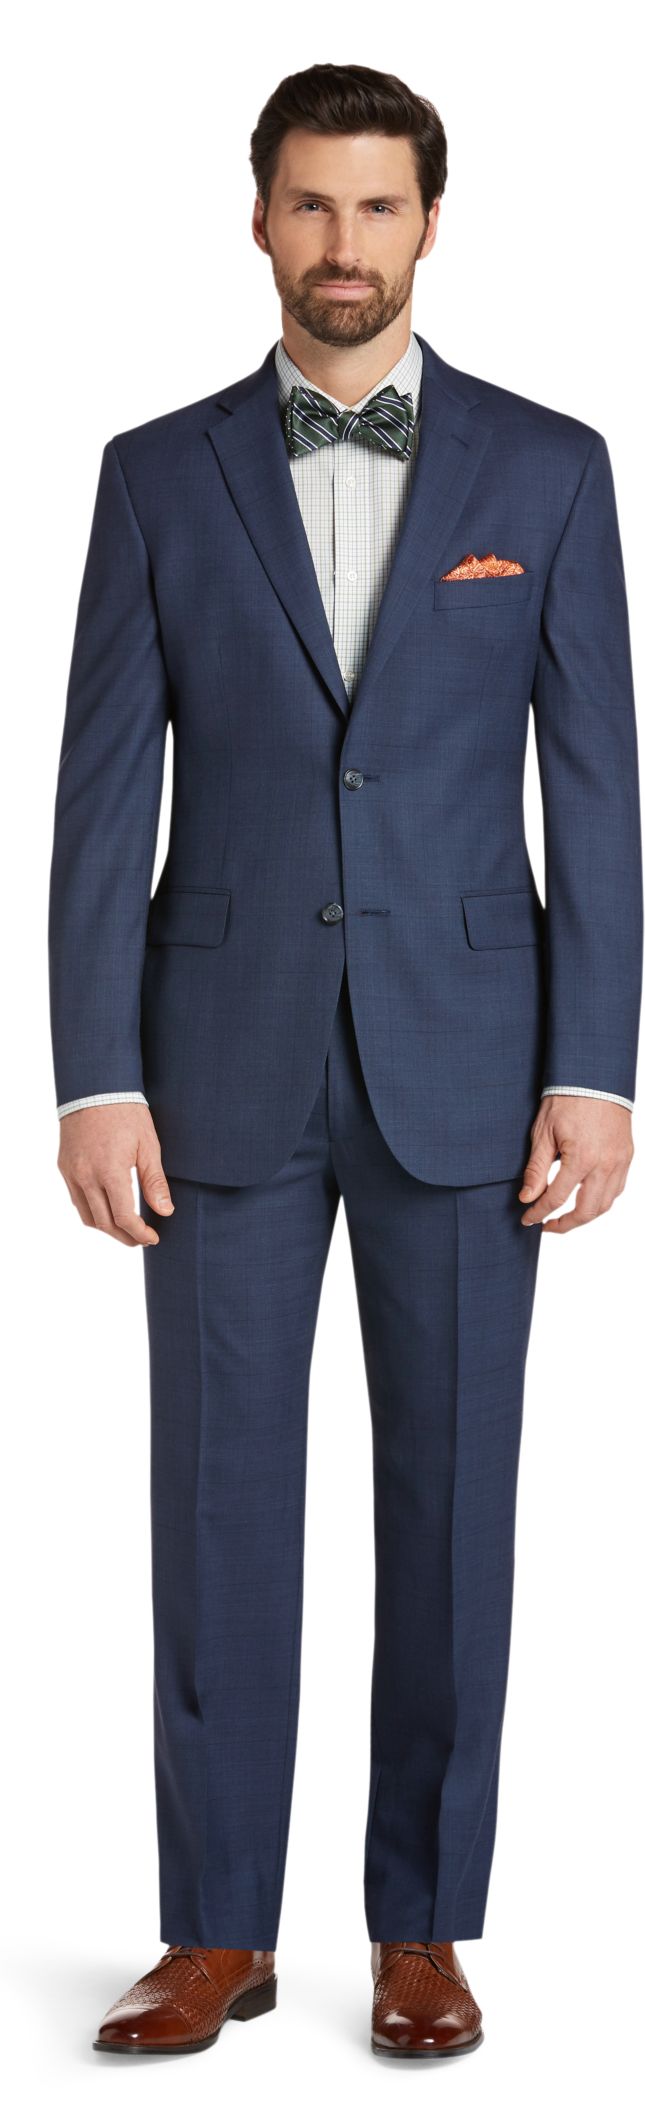 Men's Suits | Black, Navy & Grey Business Suits | JoS. A. Bank